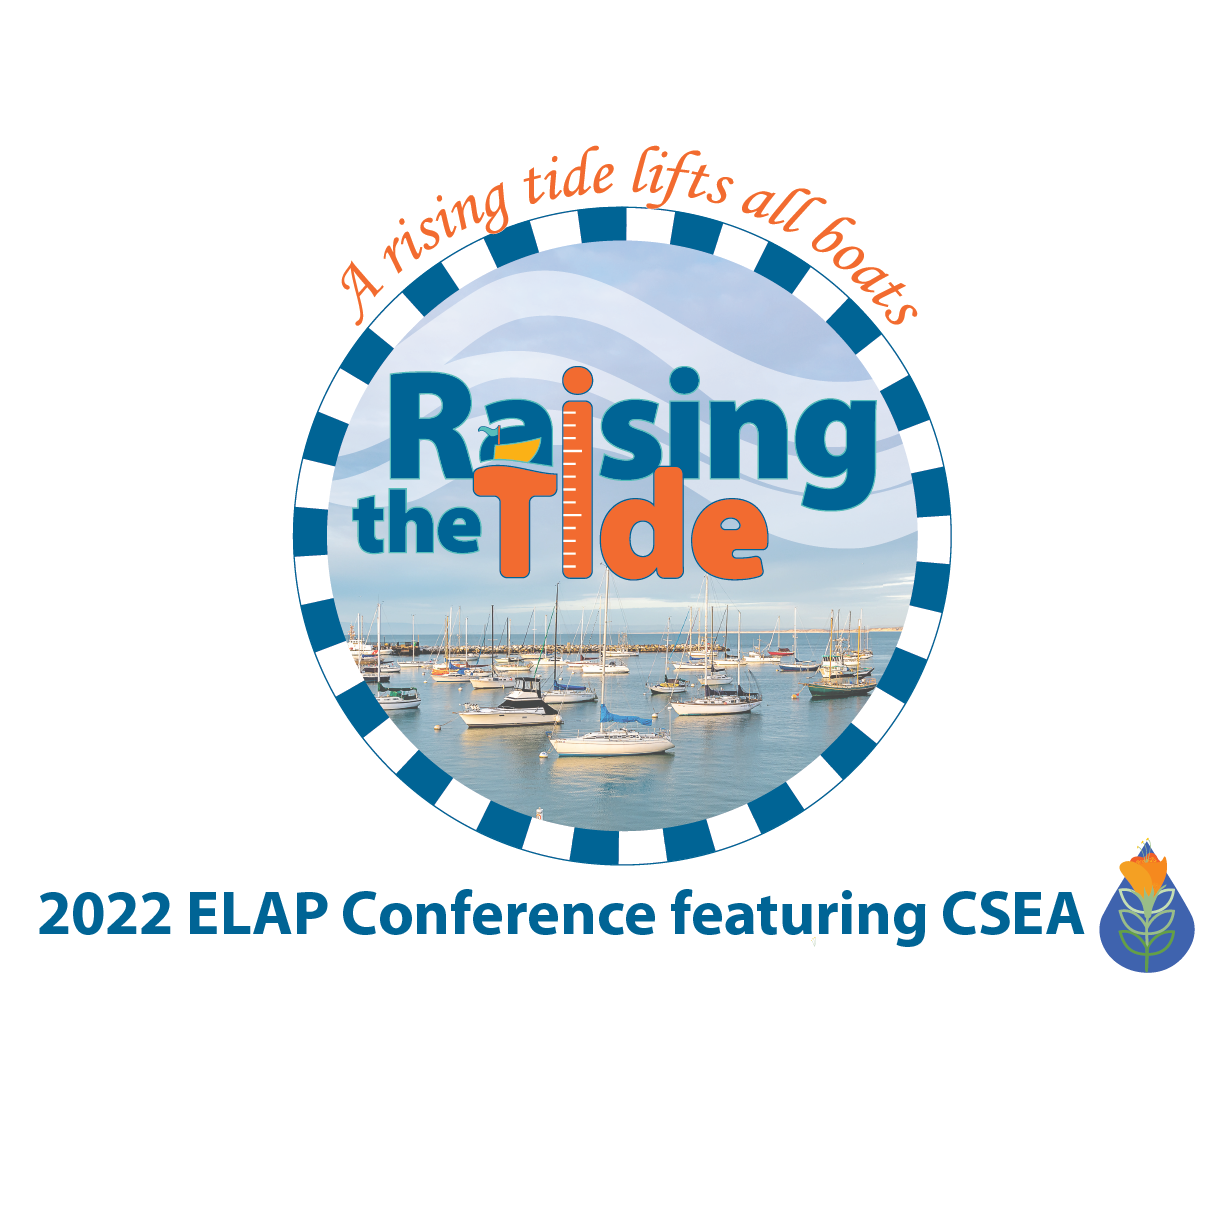 2022 ELAP Conference featuring CSEA